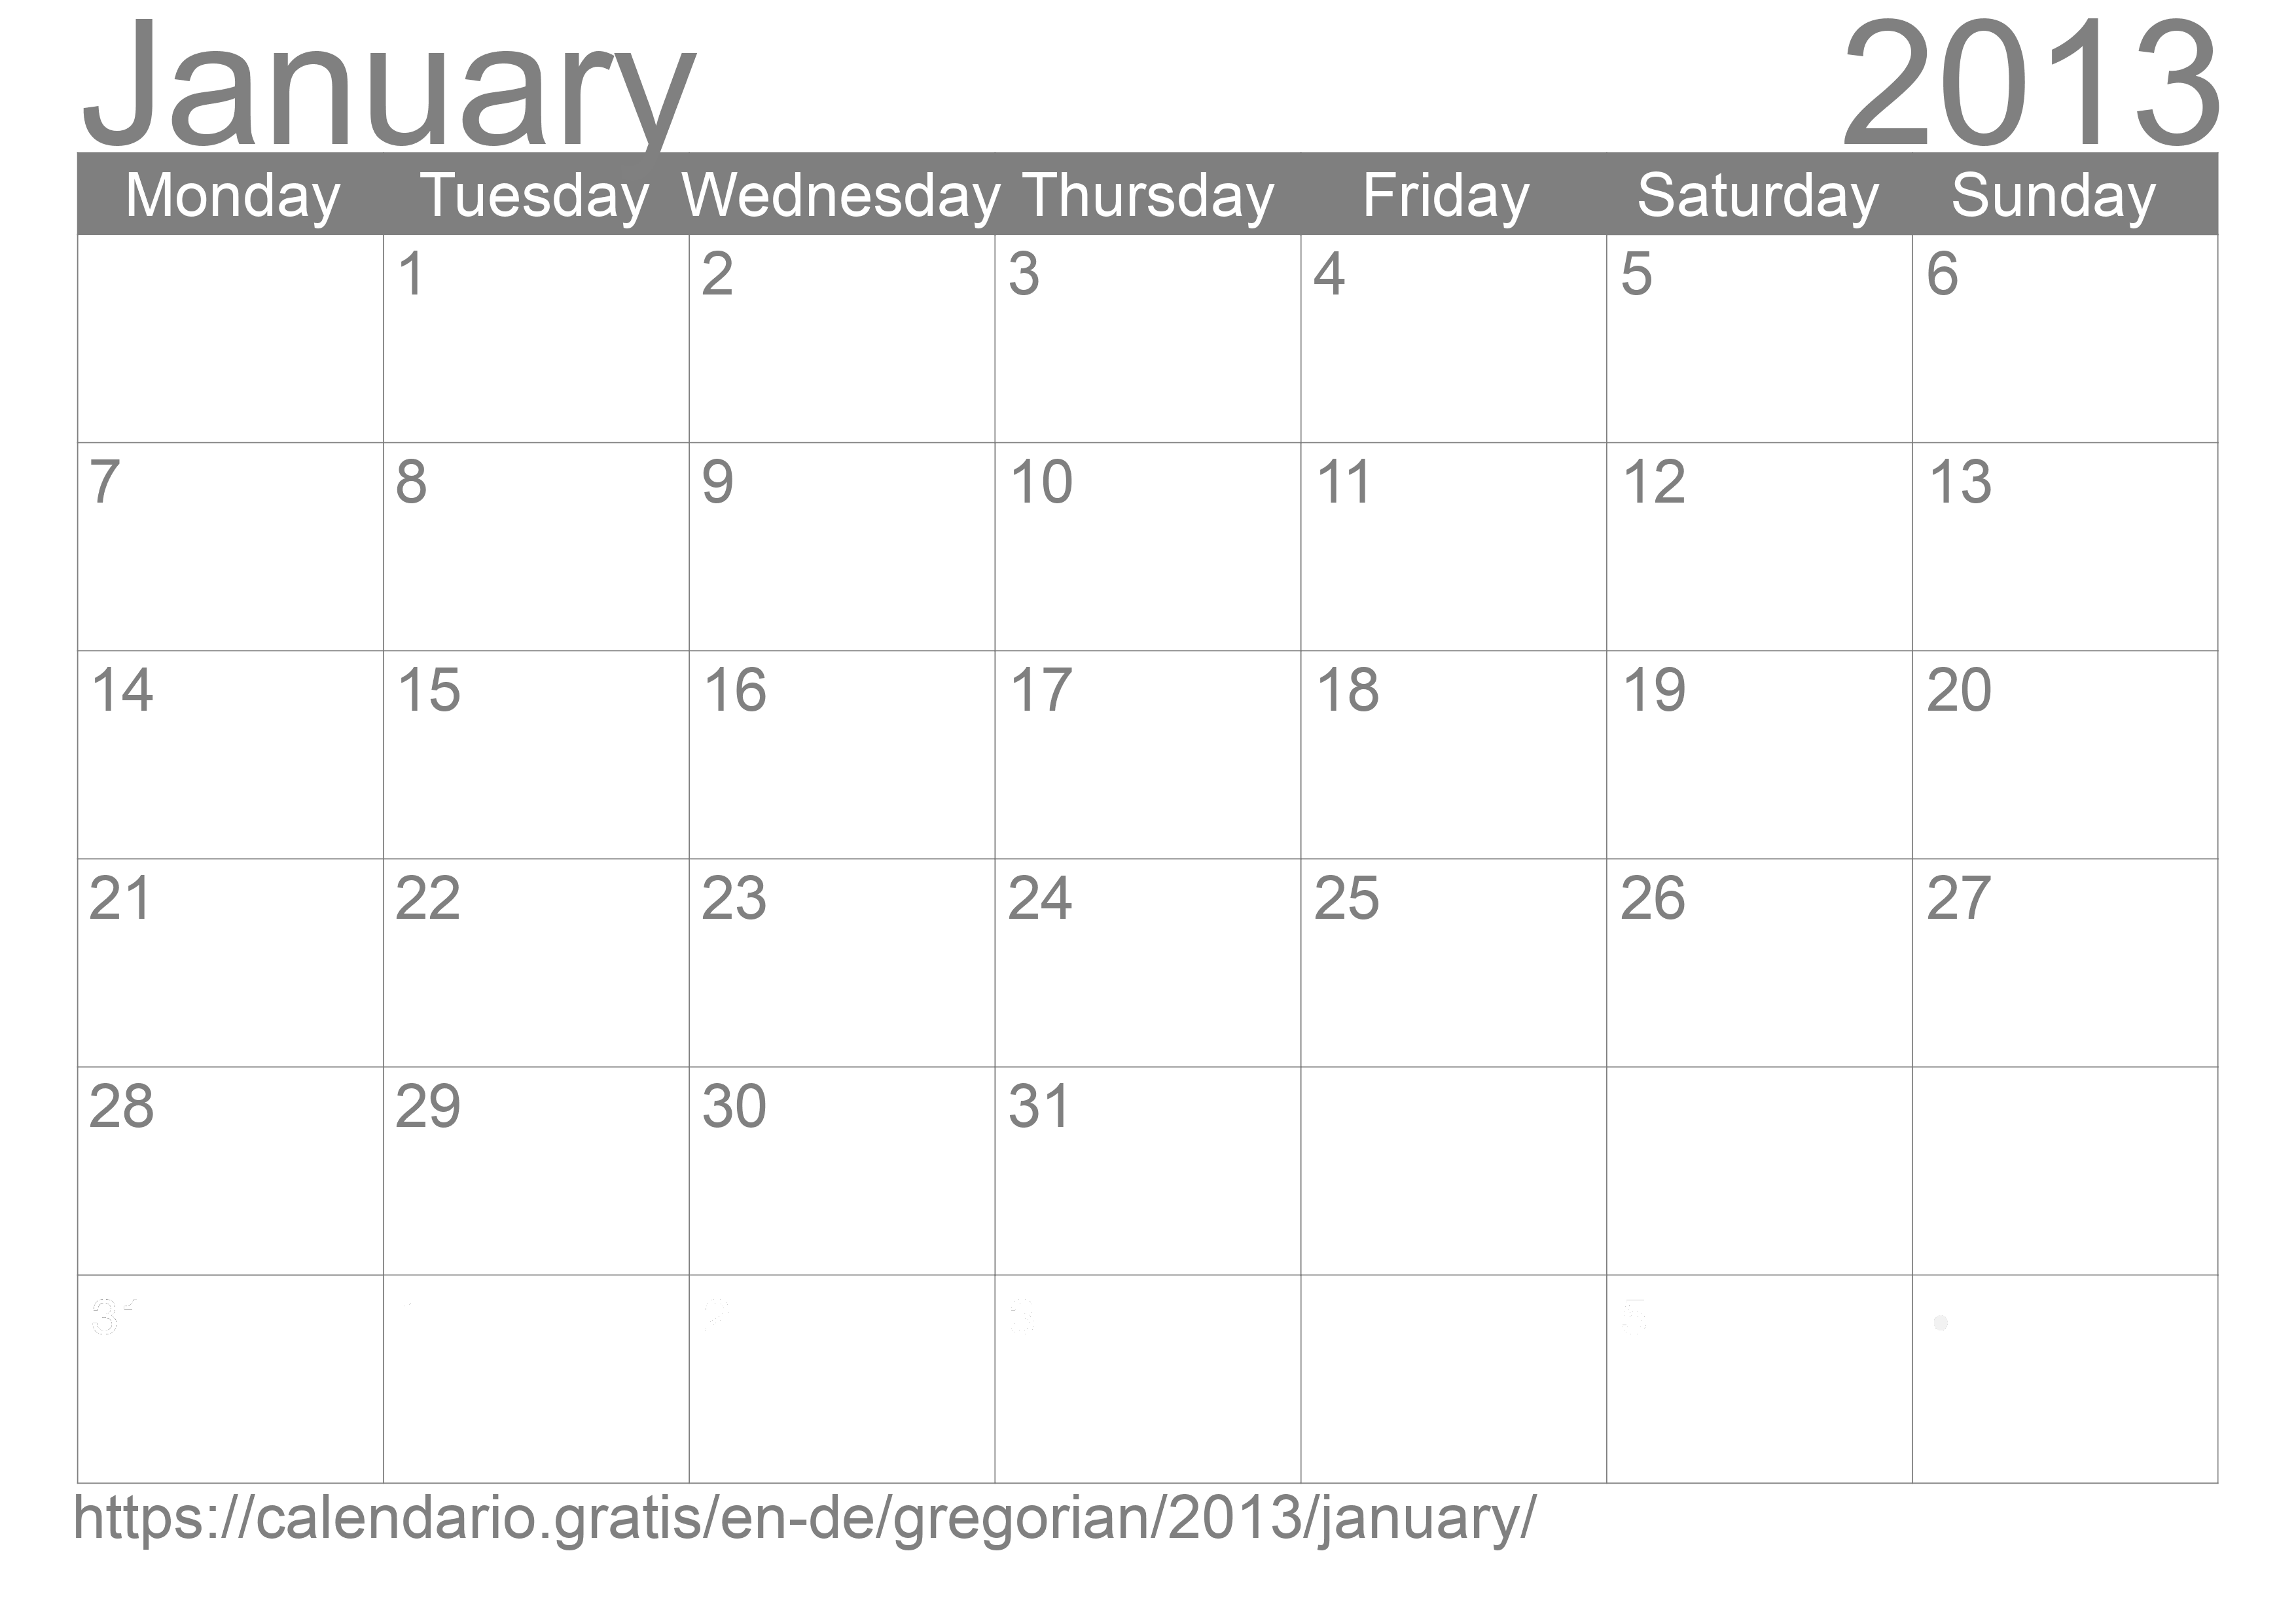 Calendar January 2013 to print